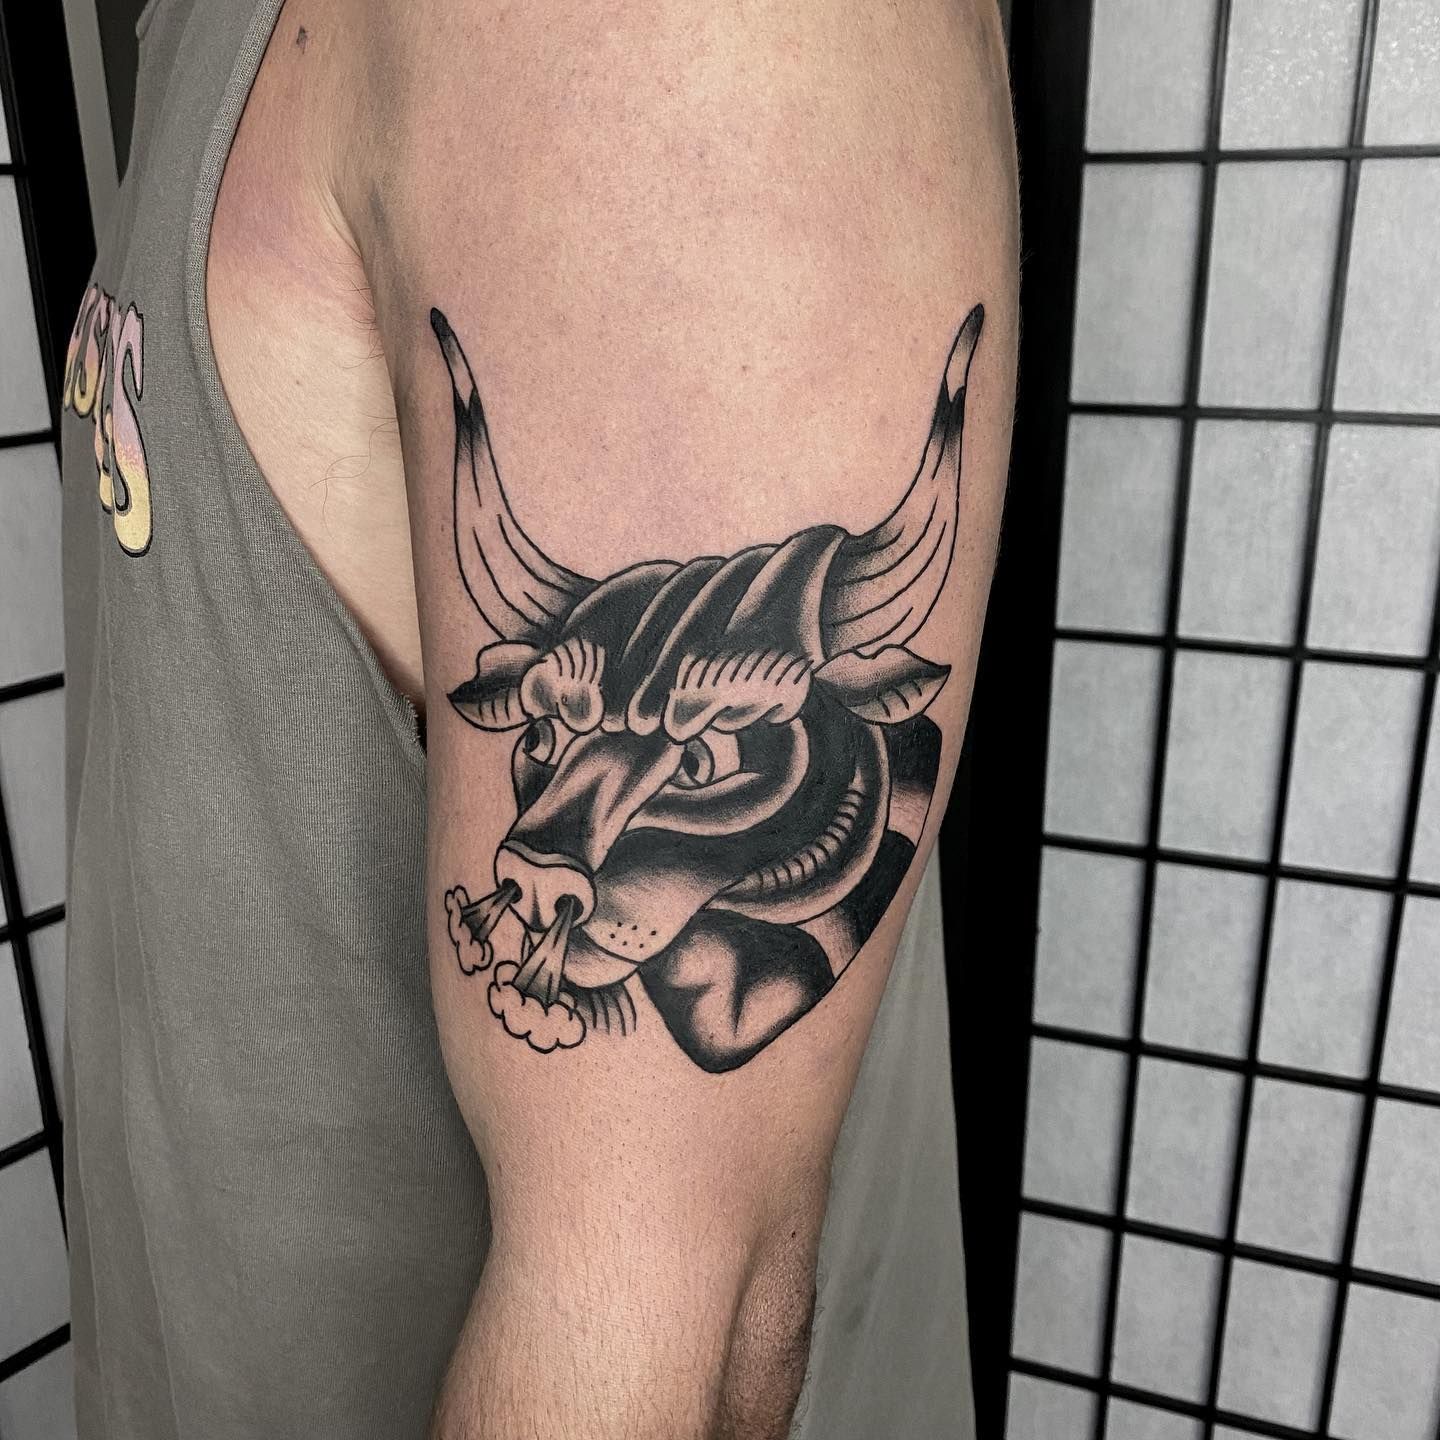 Shipwreck Sean on Instagram Longhorn skull on the knuckle tattoo tattoos  tattooing handtattoo finge  Taurus tattoos Hand tattoos for guys  Knuckle tattoos